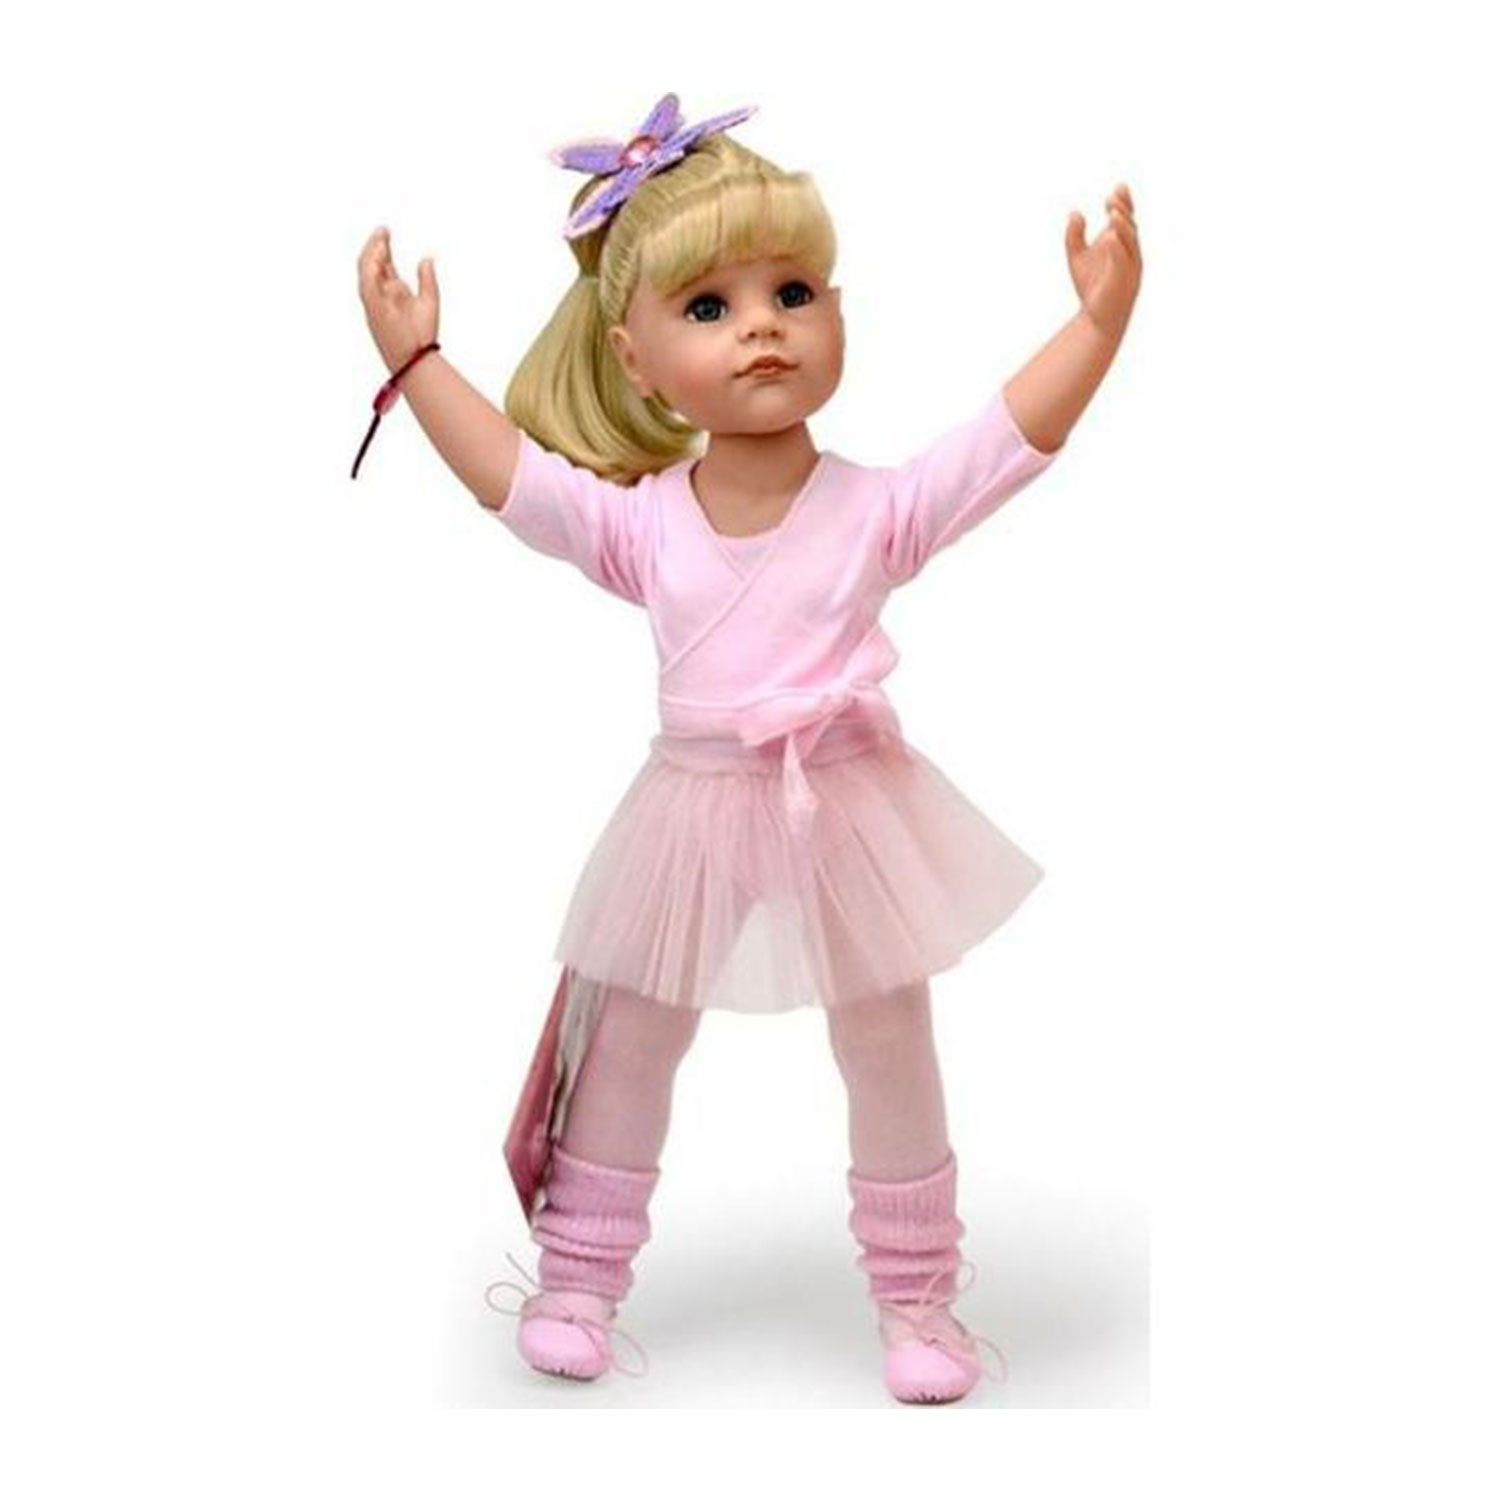 Купить куклу 50 см. Кукла Gotz Ханна балерина, 50 см. Ханна балерина Готц. Кукла Готц Ханна балерина. Куклы Gotz балерины.